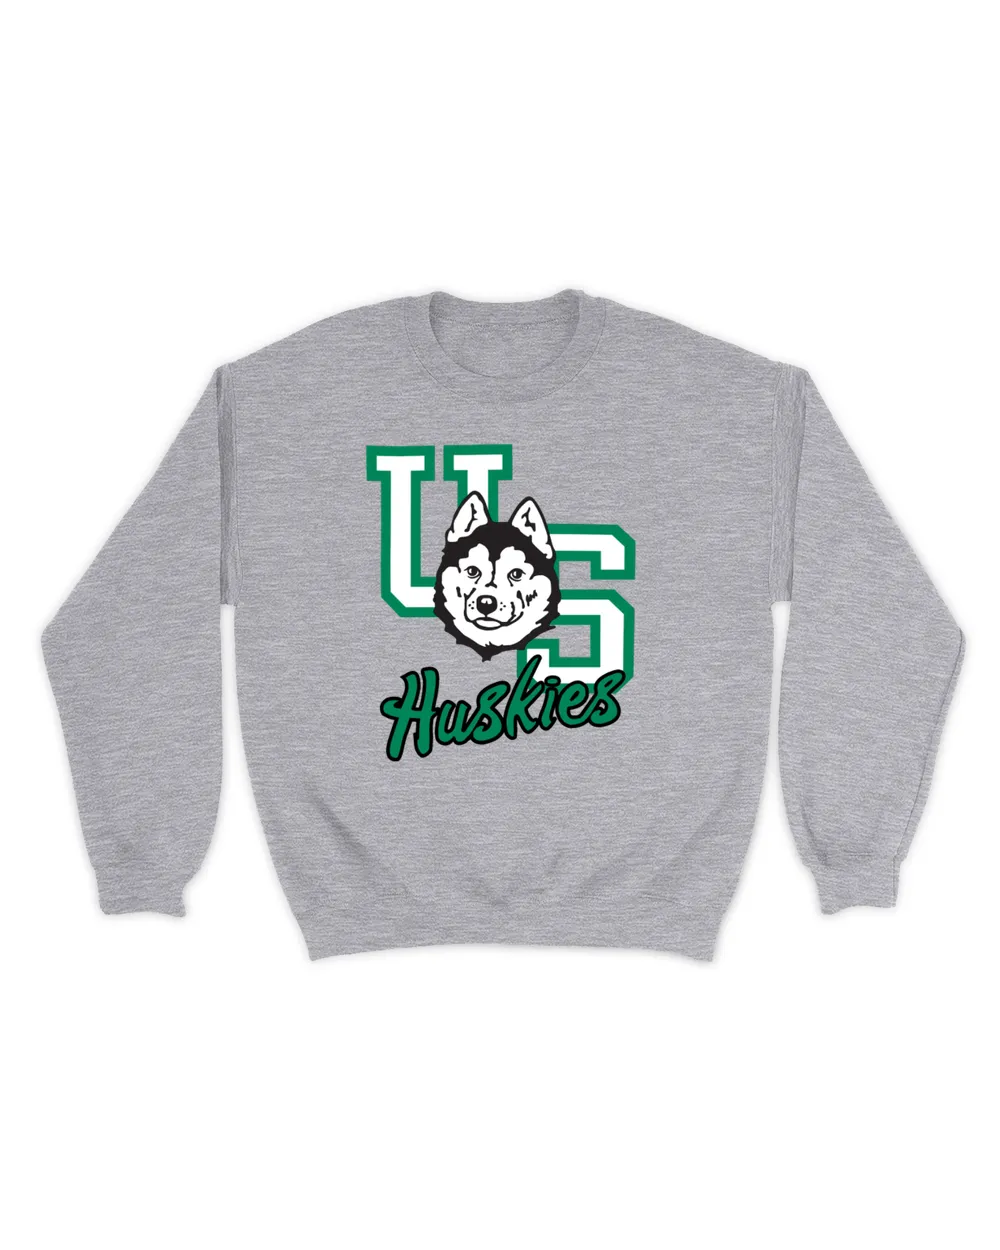 U Of S Huskies T-Shirt Unisex Sweatshirt sport-grey 